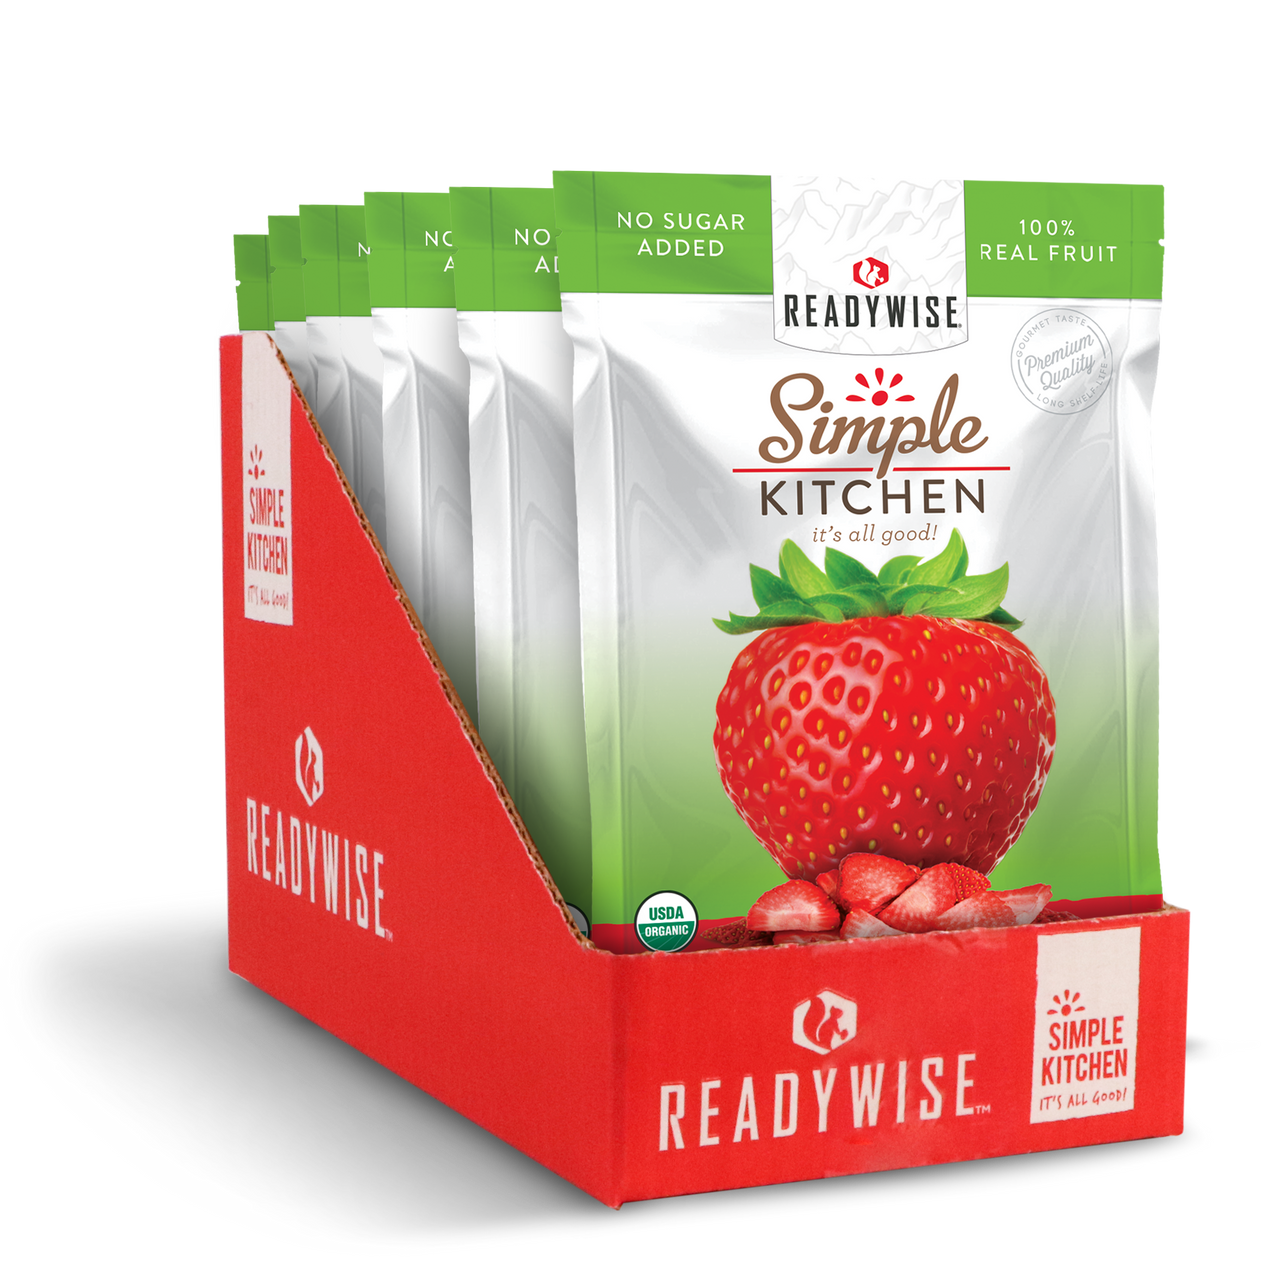 6 CT Case Simple Kitchen Organic FD Strawberries